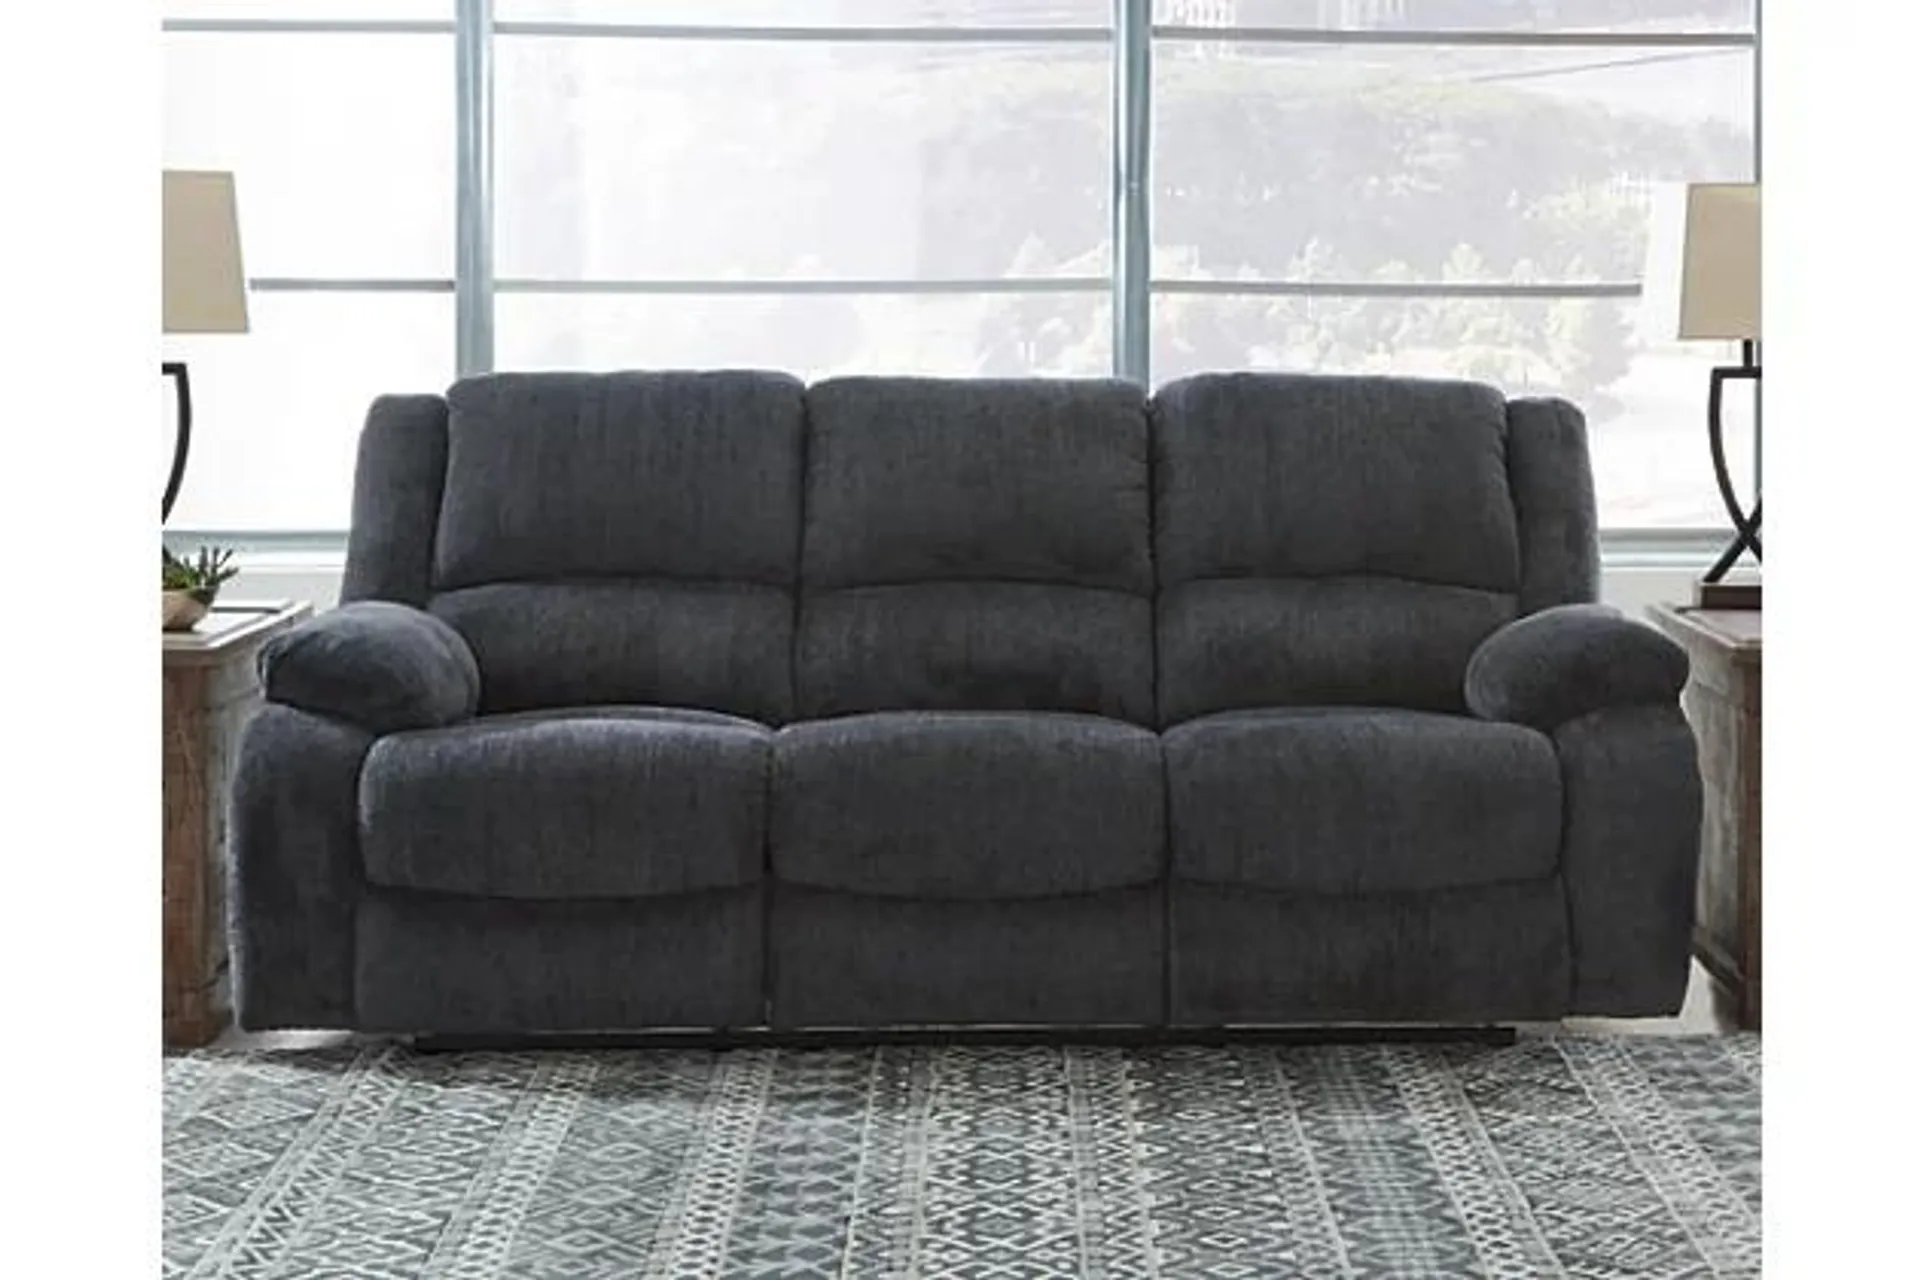 Draycoll Manual Reclining Sofa